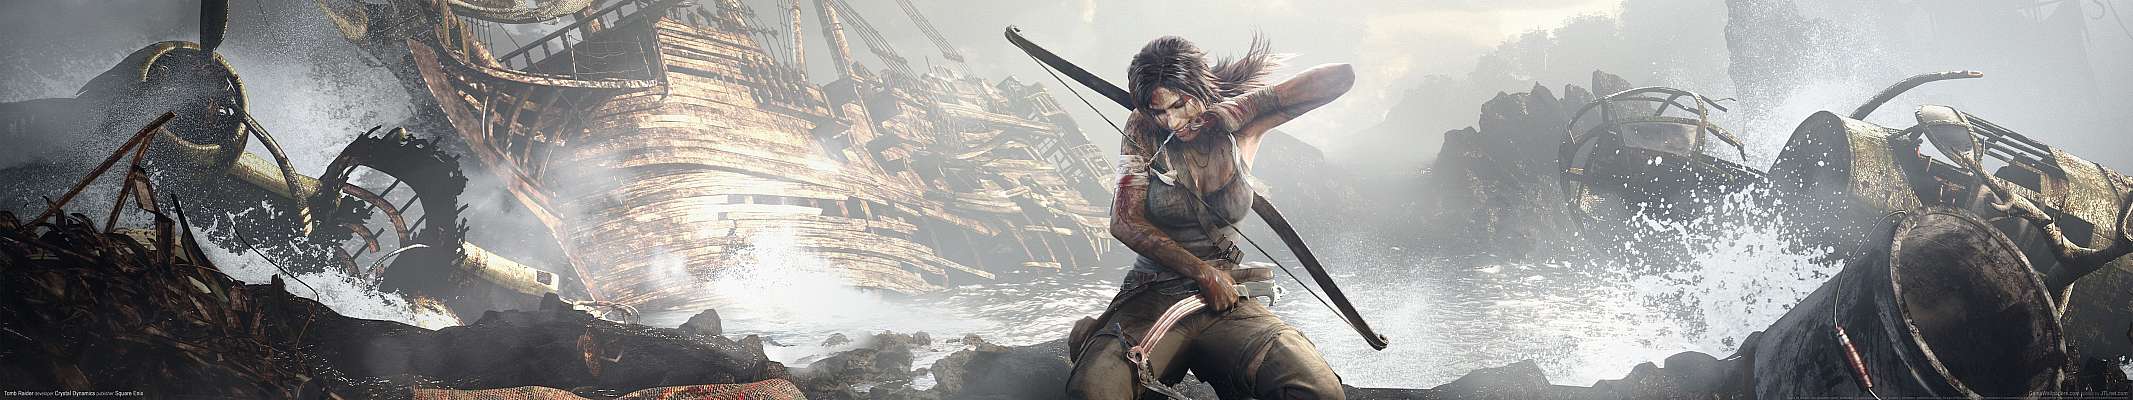 Tomb Raider triple screen fond d'écran